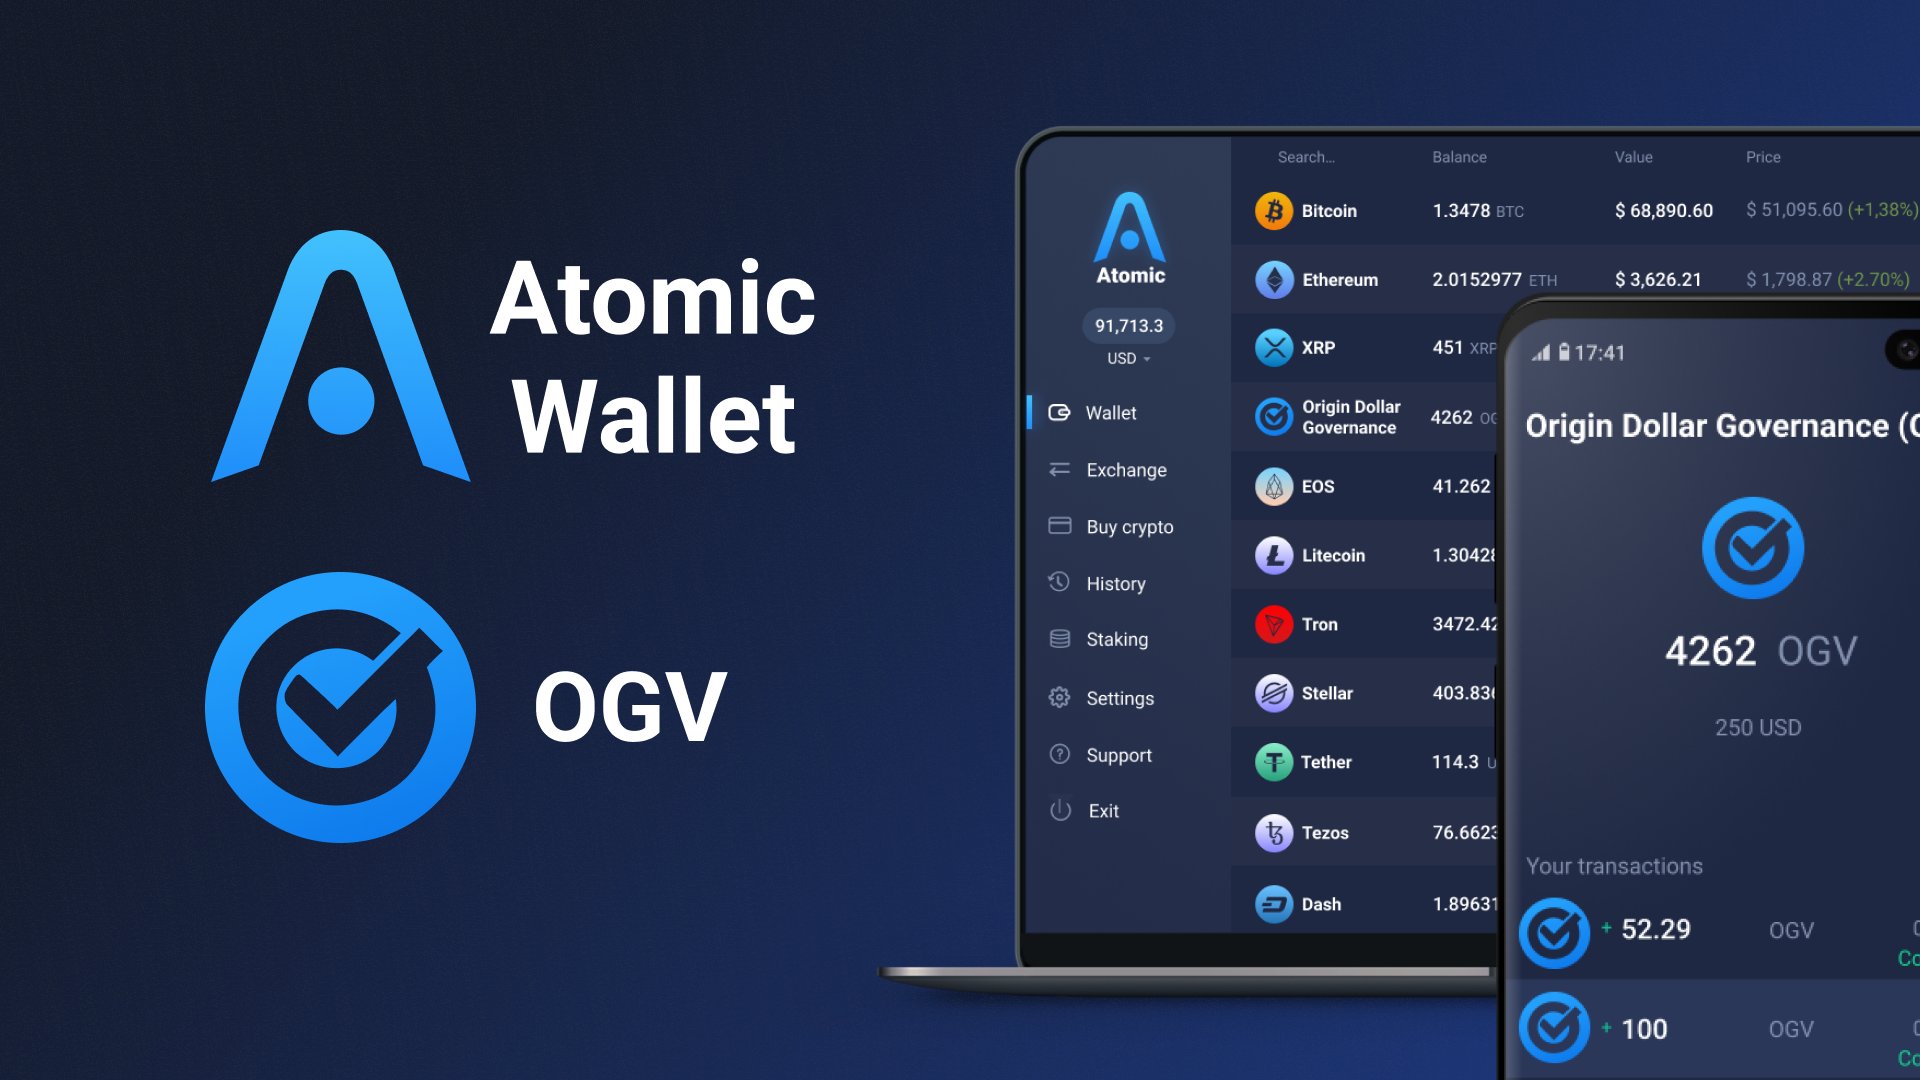 Atomic Wallet on Twitter